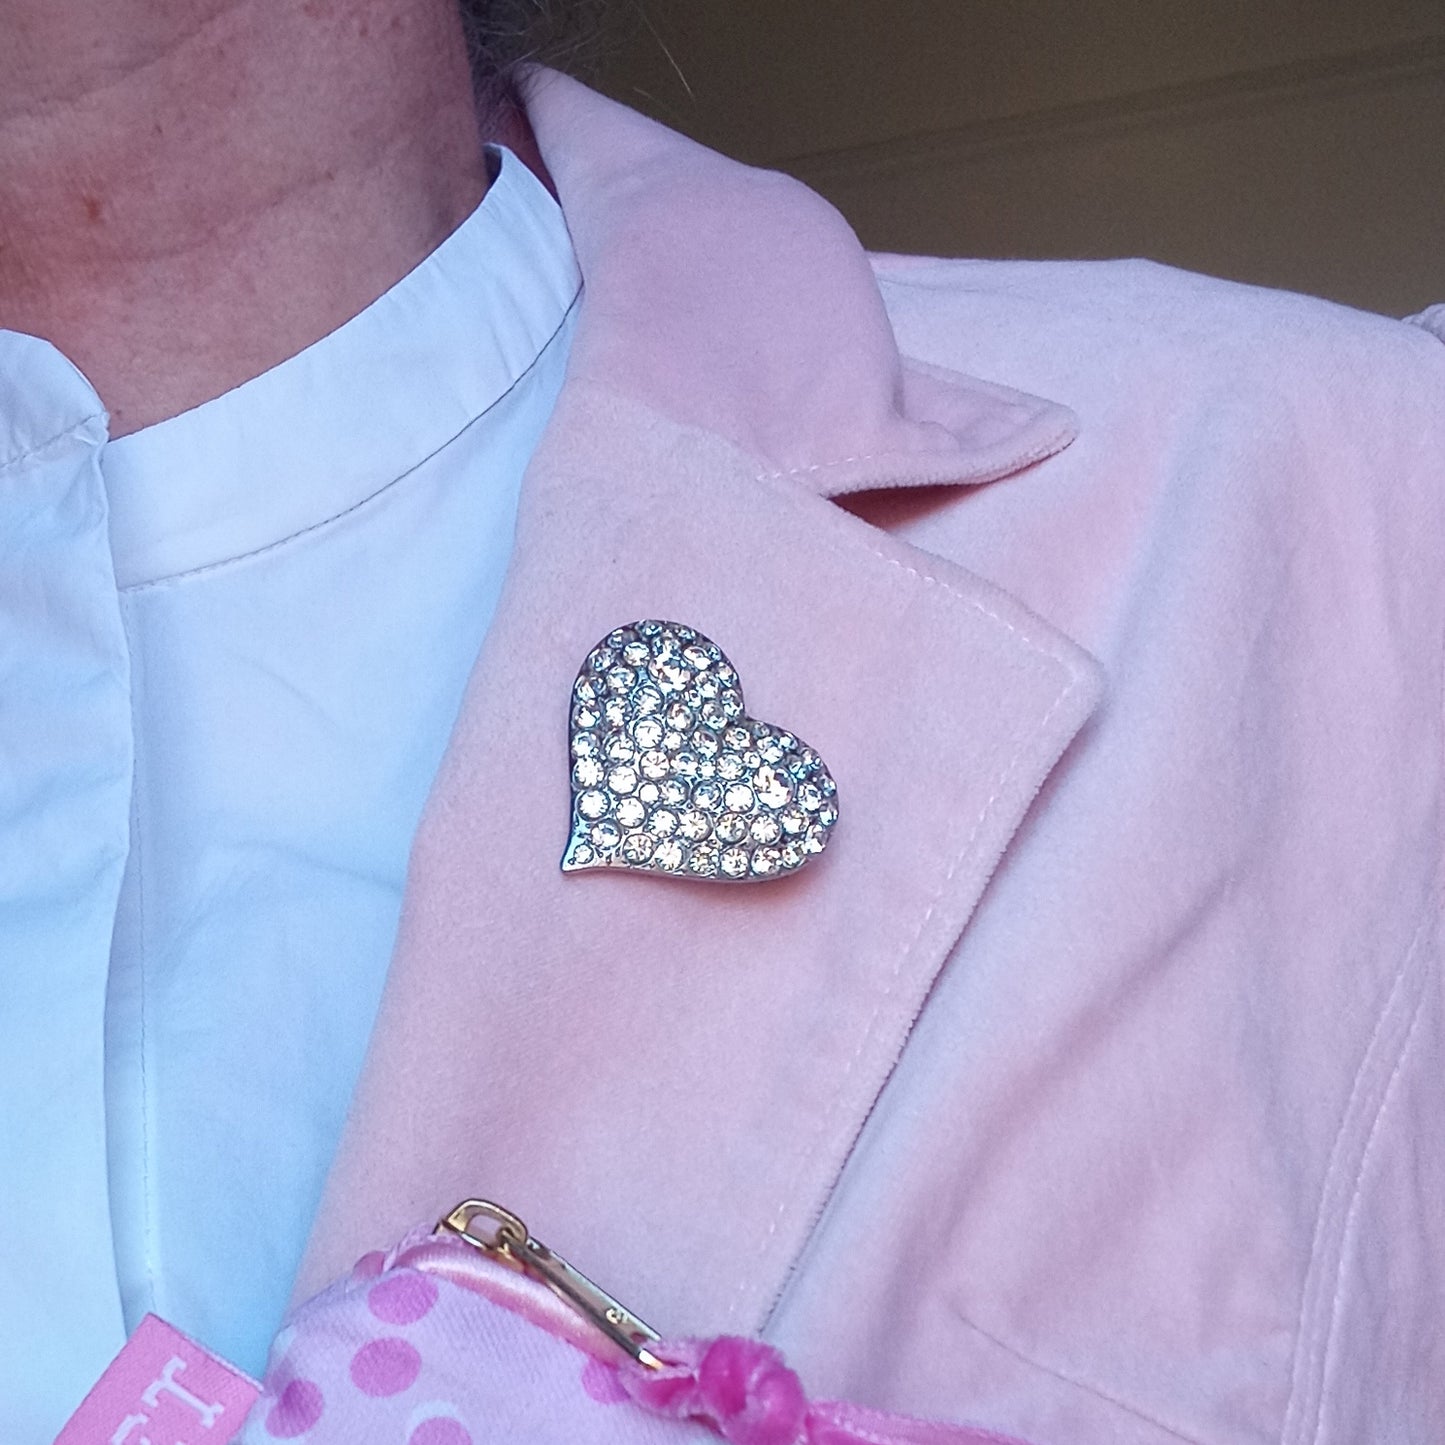 Vintage Diamanté Heart Brooch